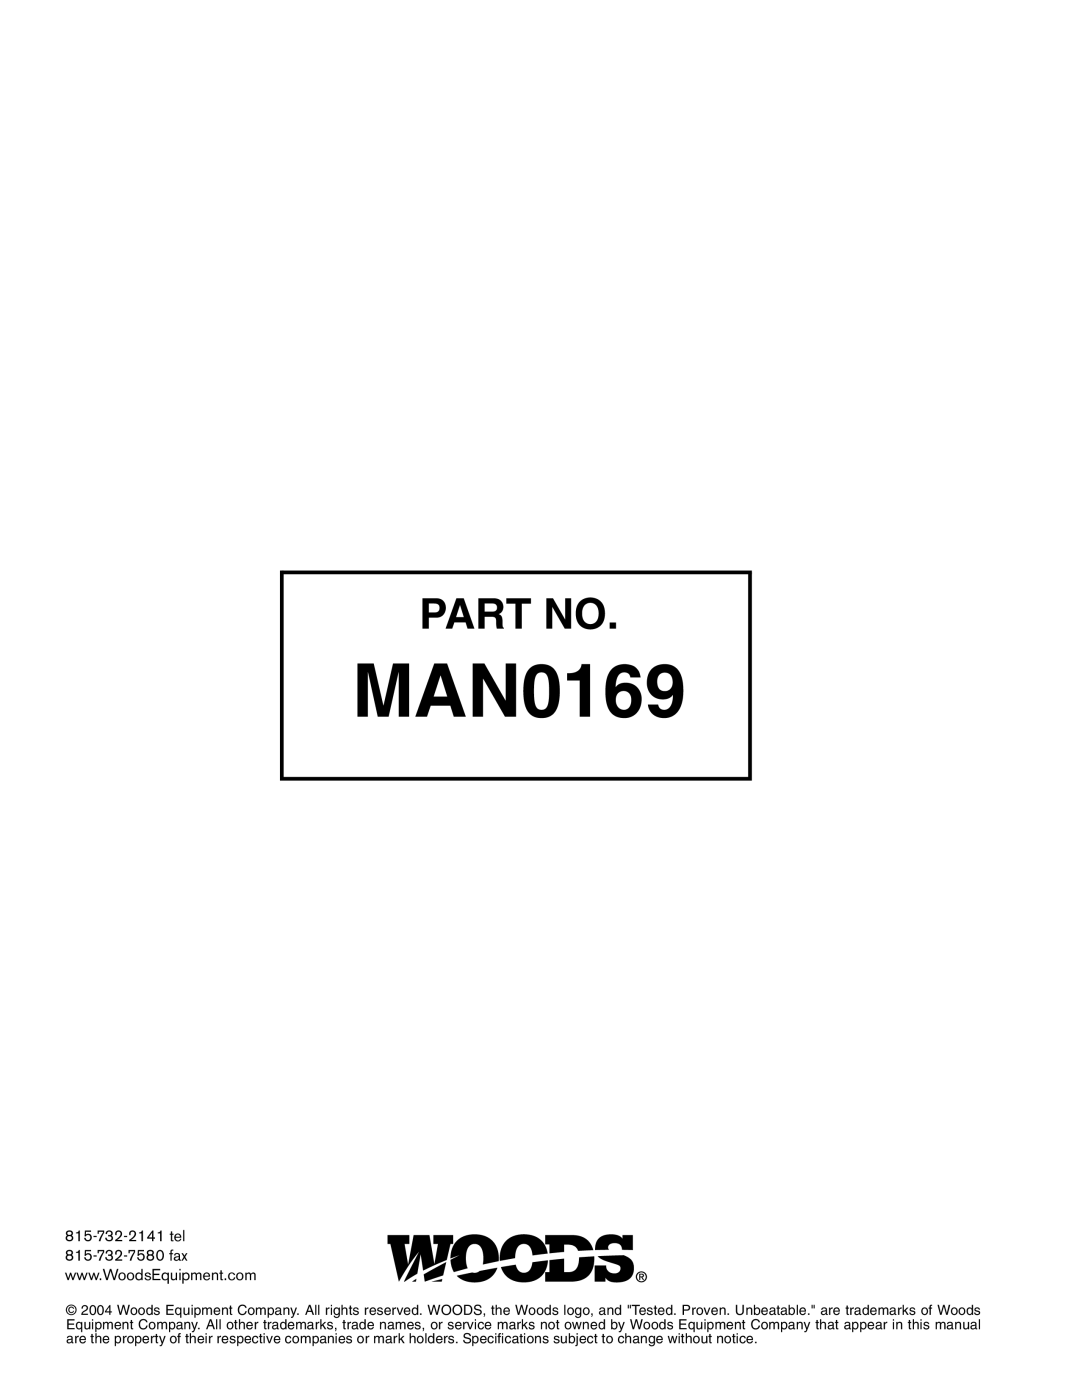 Woods Equipment RBC60 LRC60 manual MAN0169 